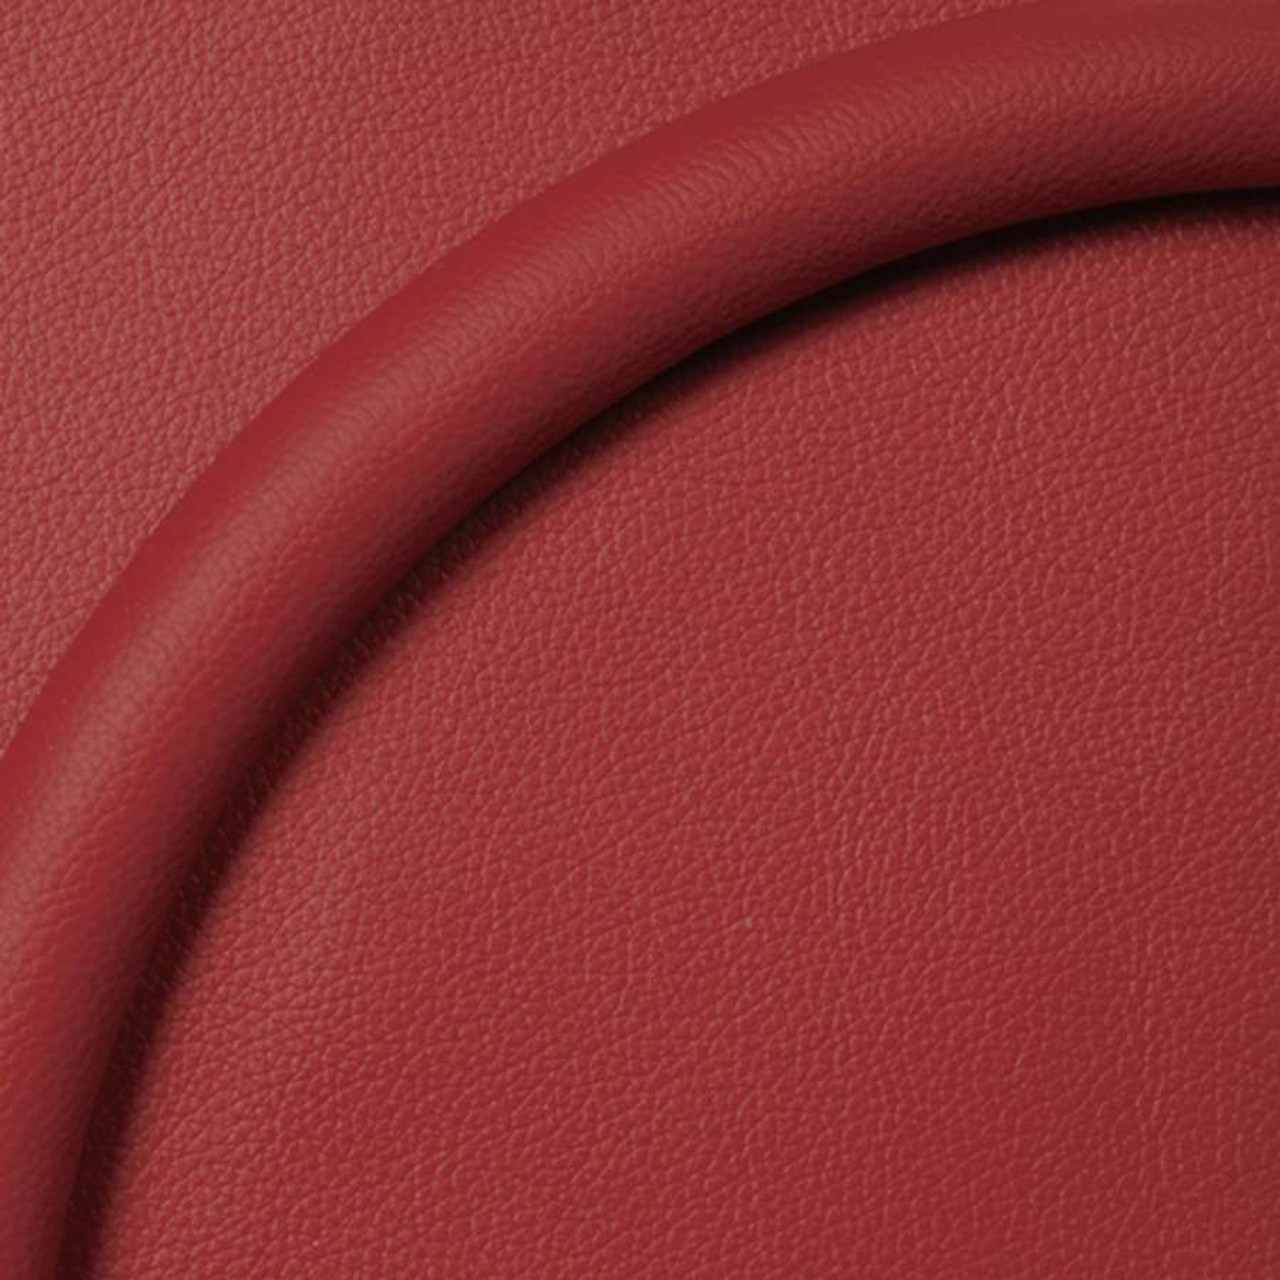 Steering Wheel Red Wrap Leather Half